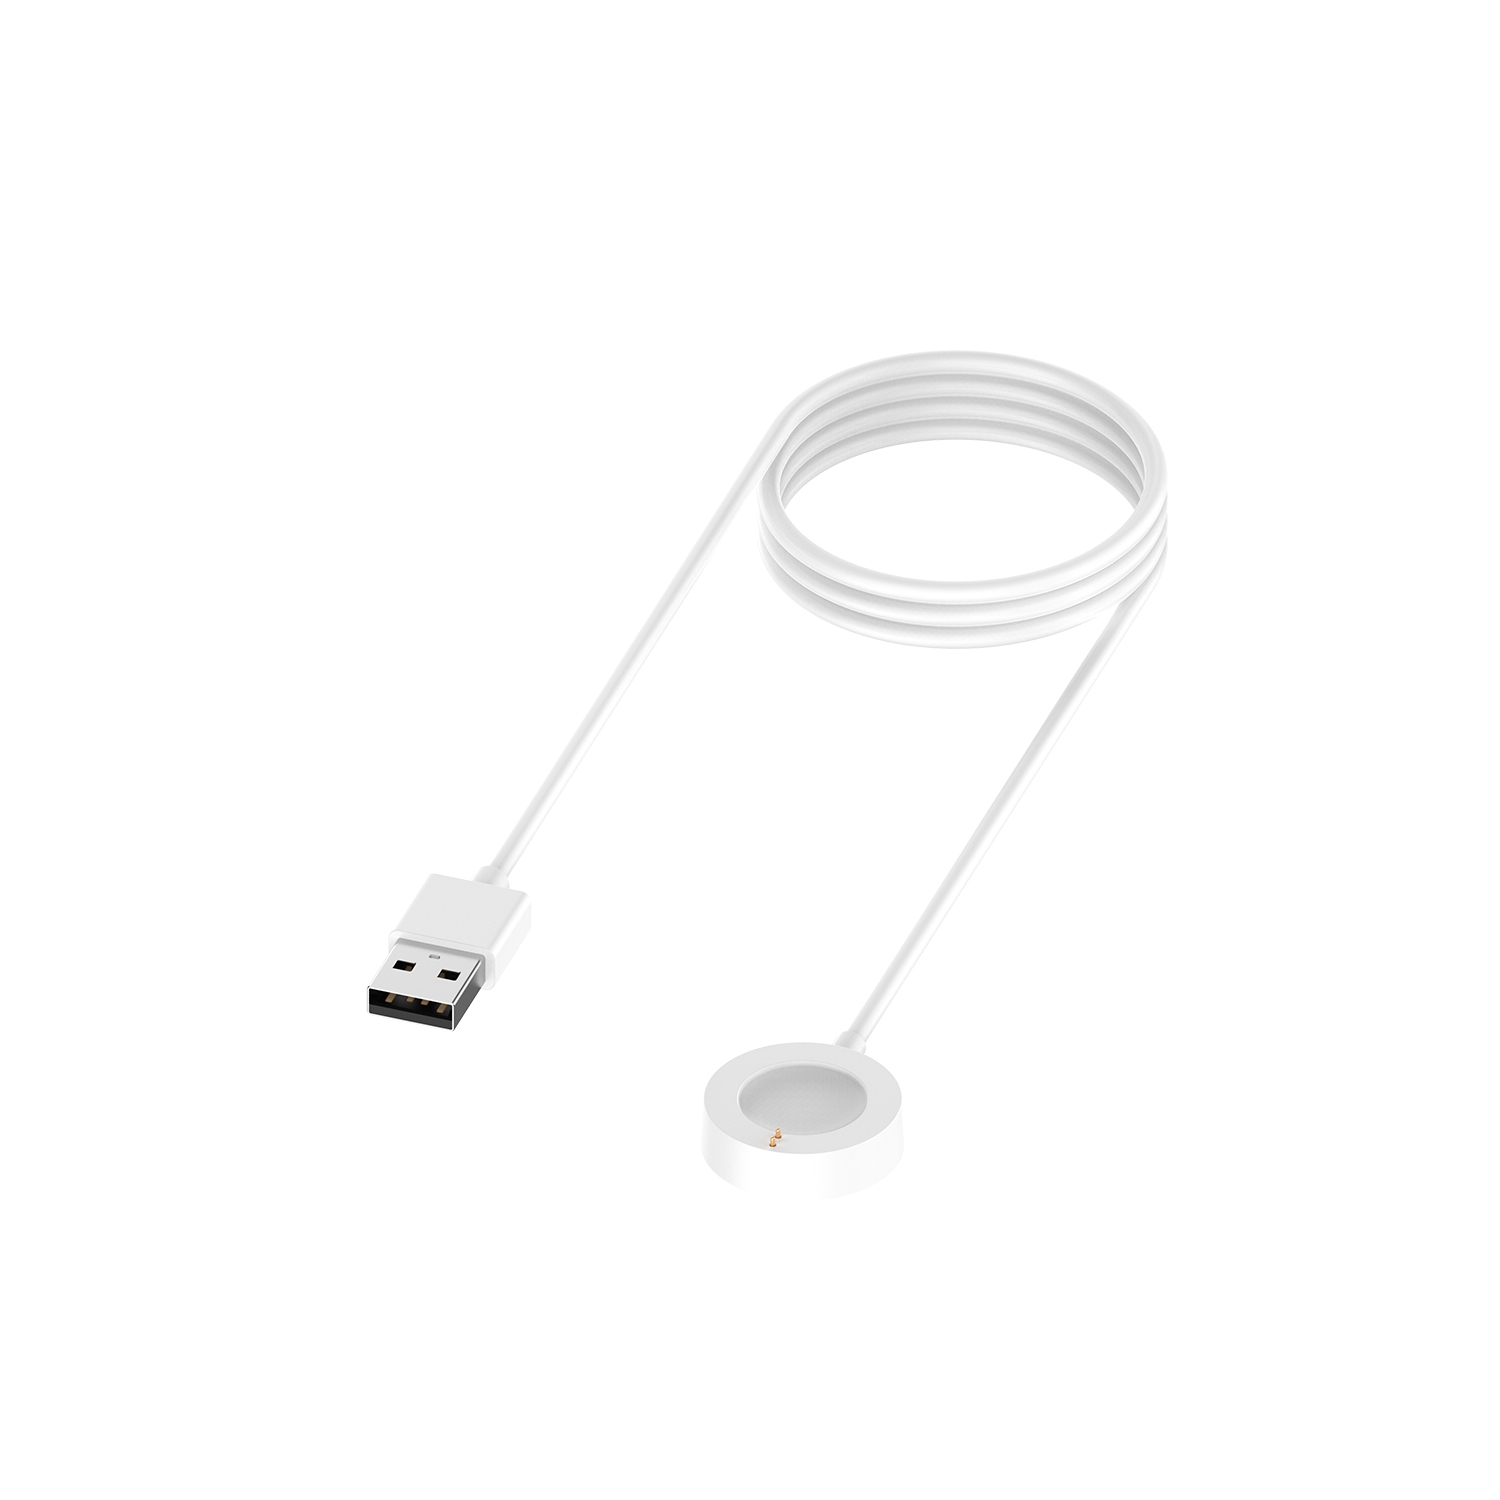 StrapsCo USB Charger for Misfit Vapor 2 - White